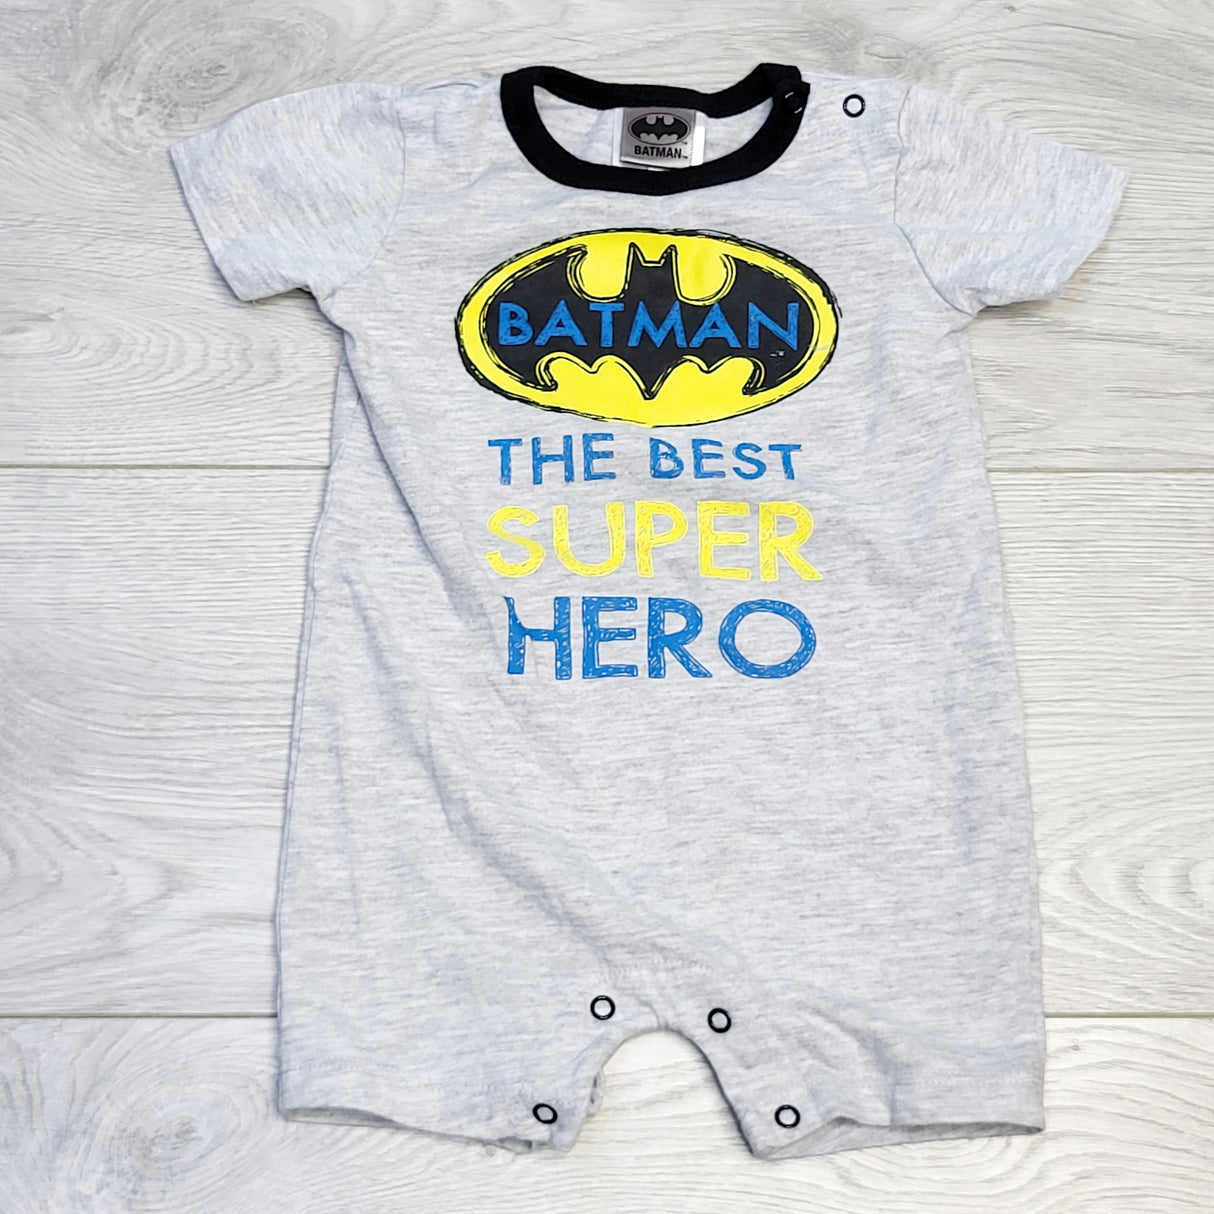 CHOL1 - Grey Batman cotton romper "The Best Super Hero", size 3-6 months